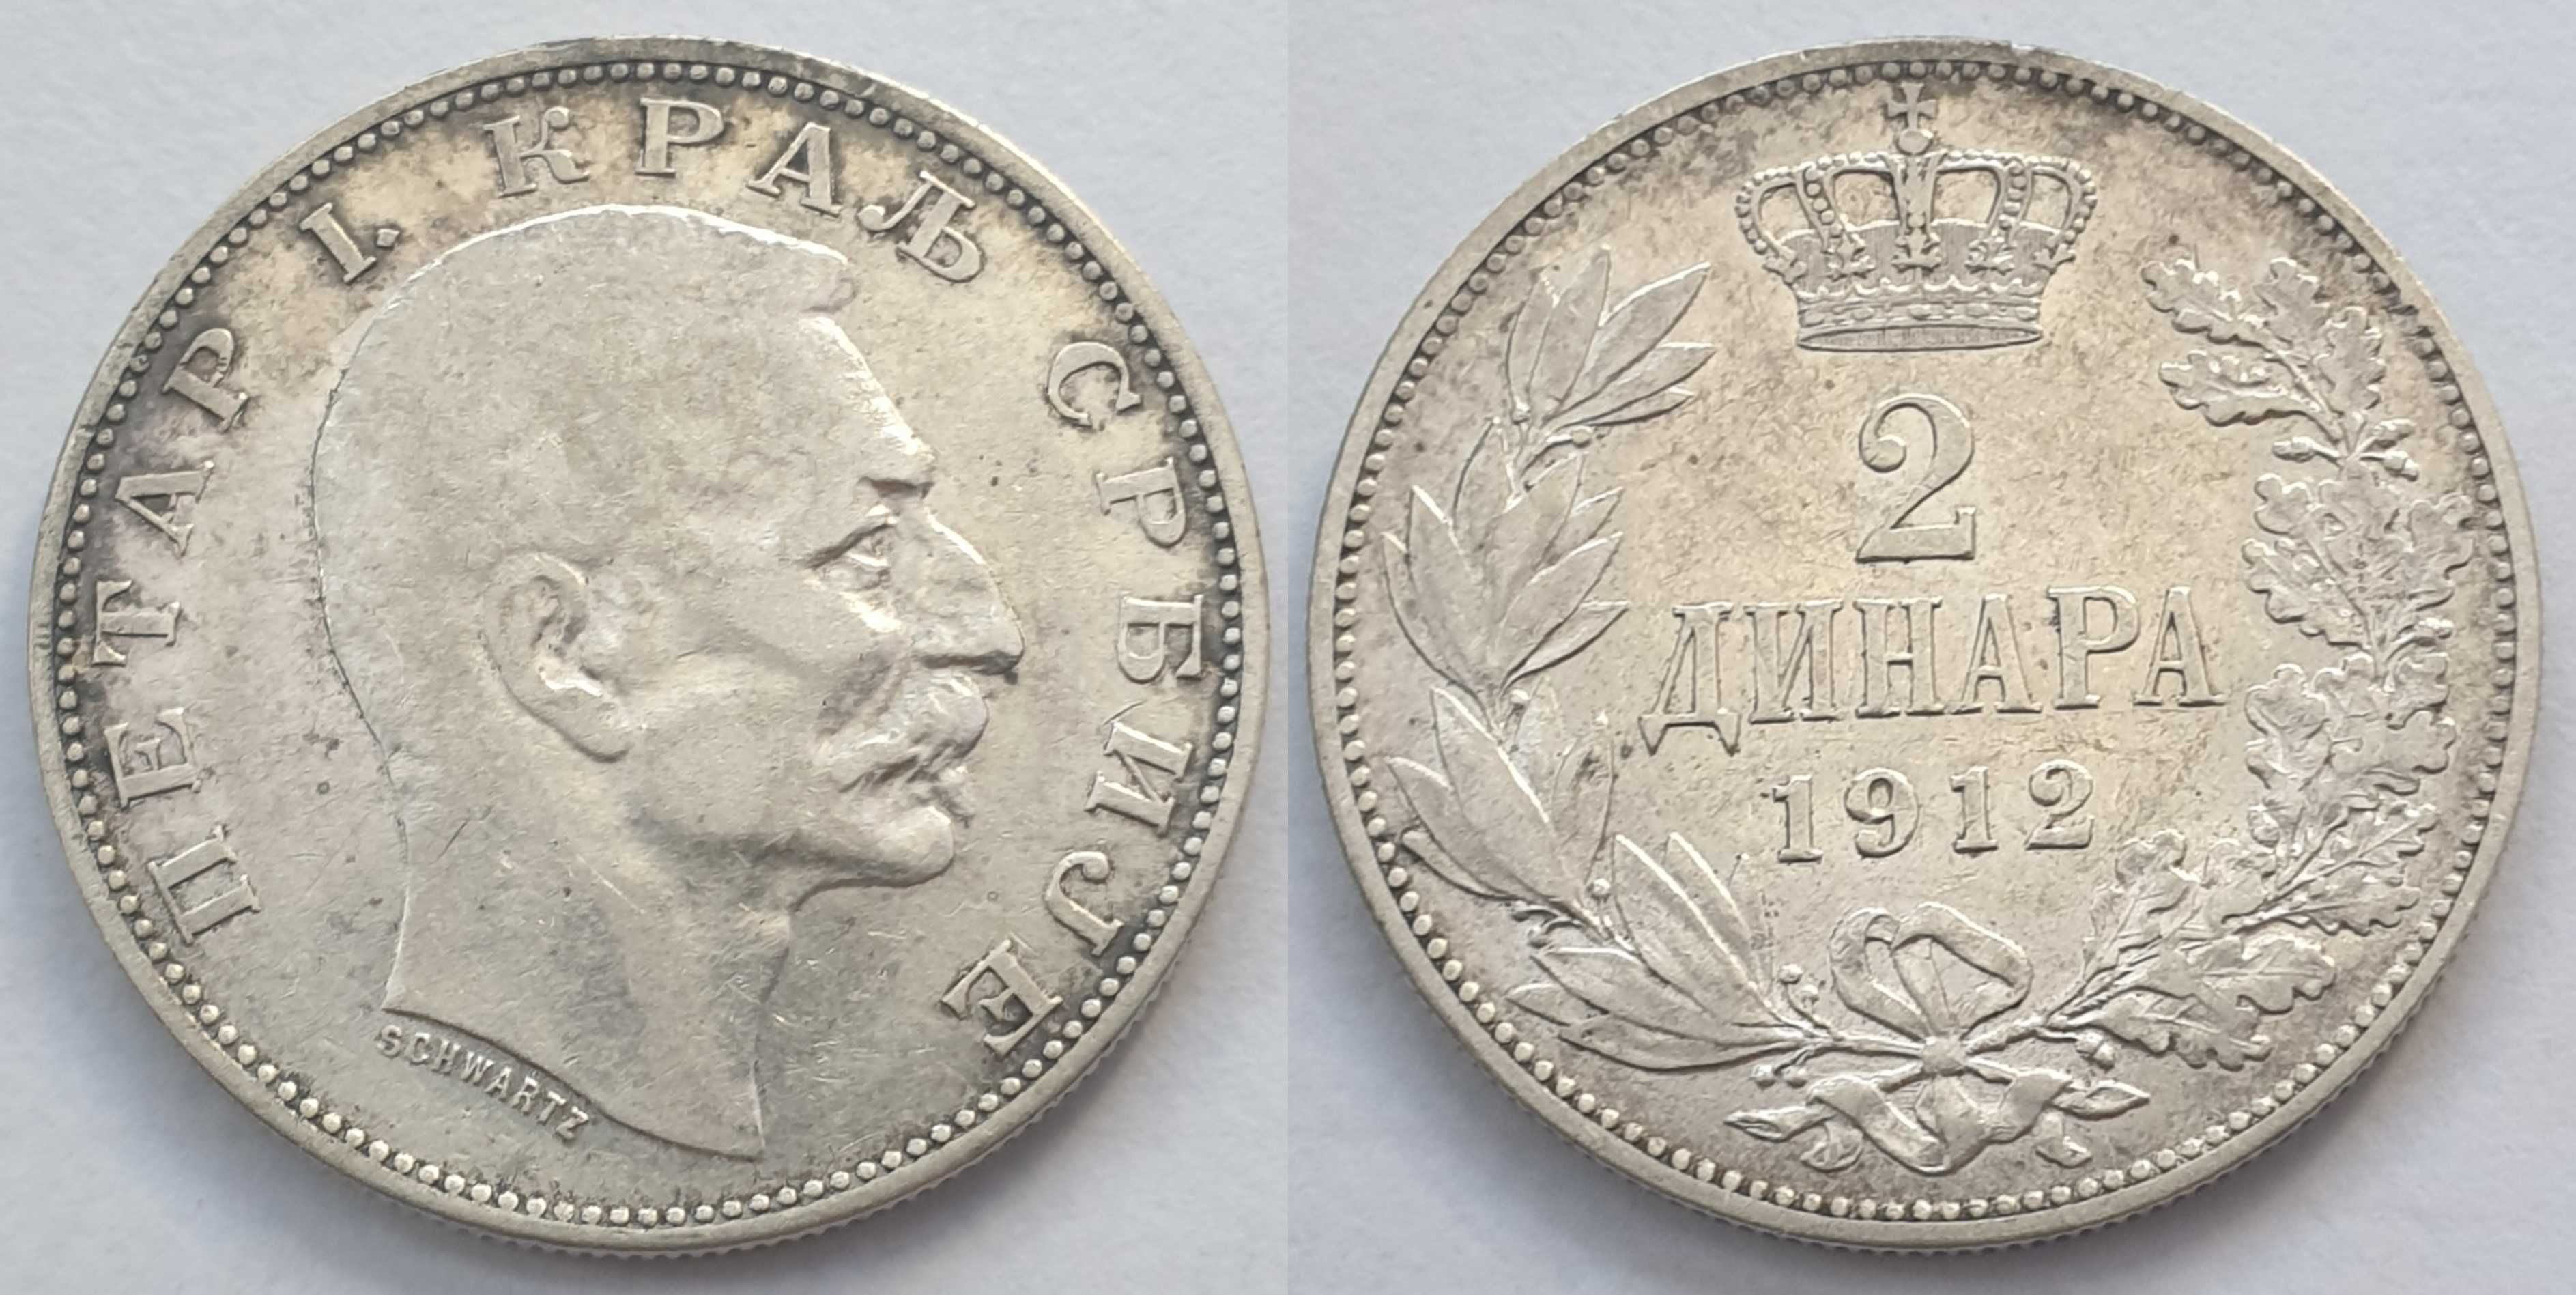 Serbia 2 dinary 1912 srebro